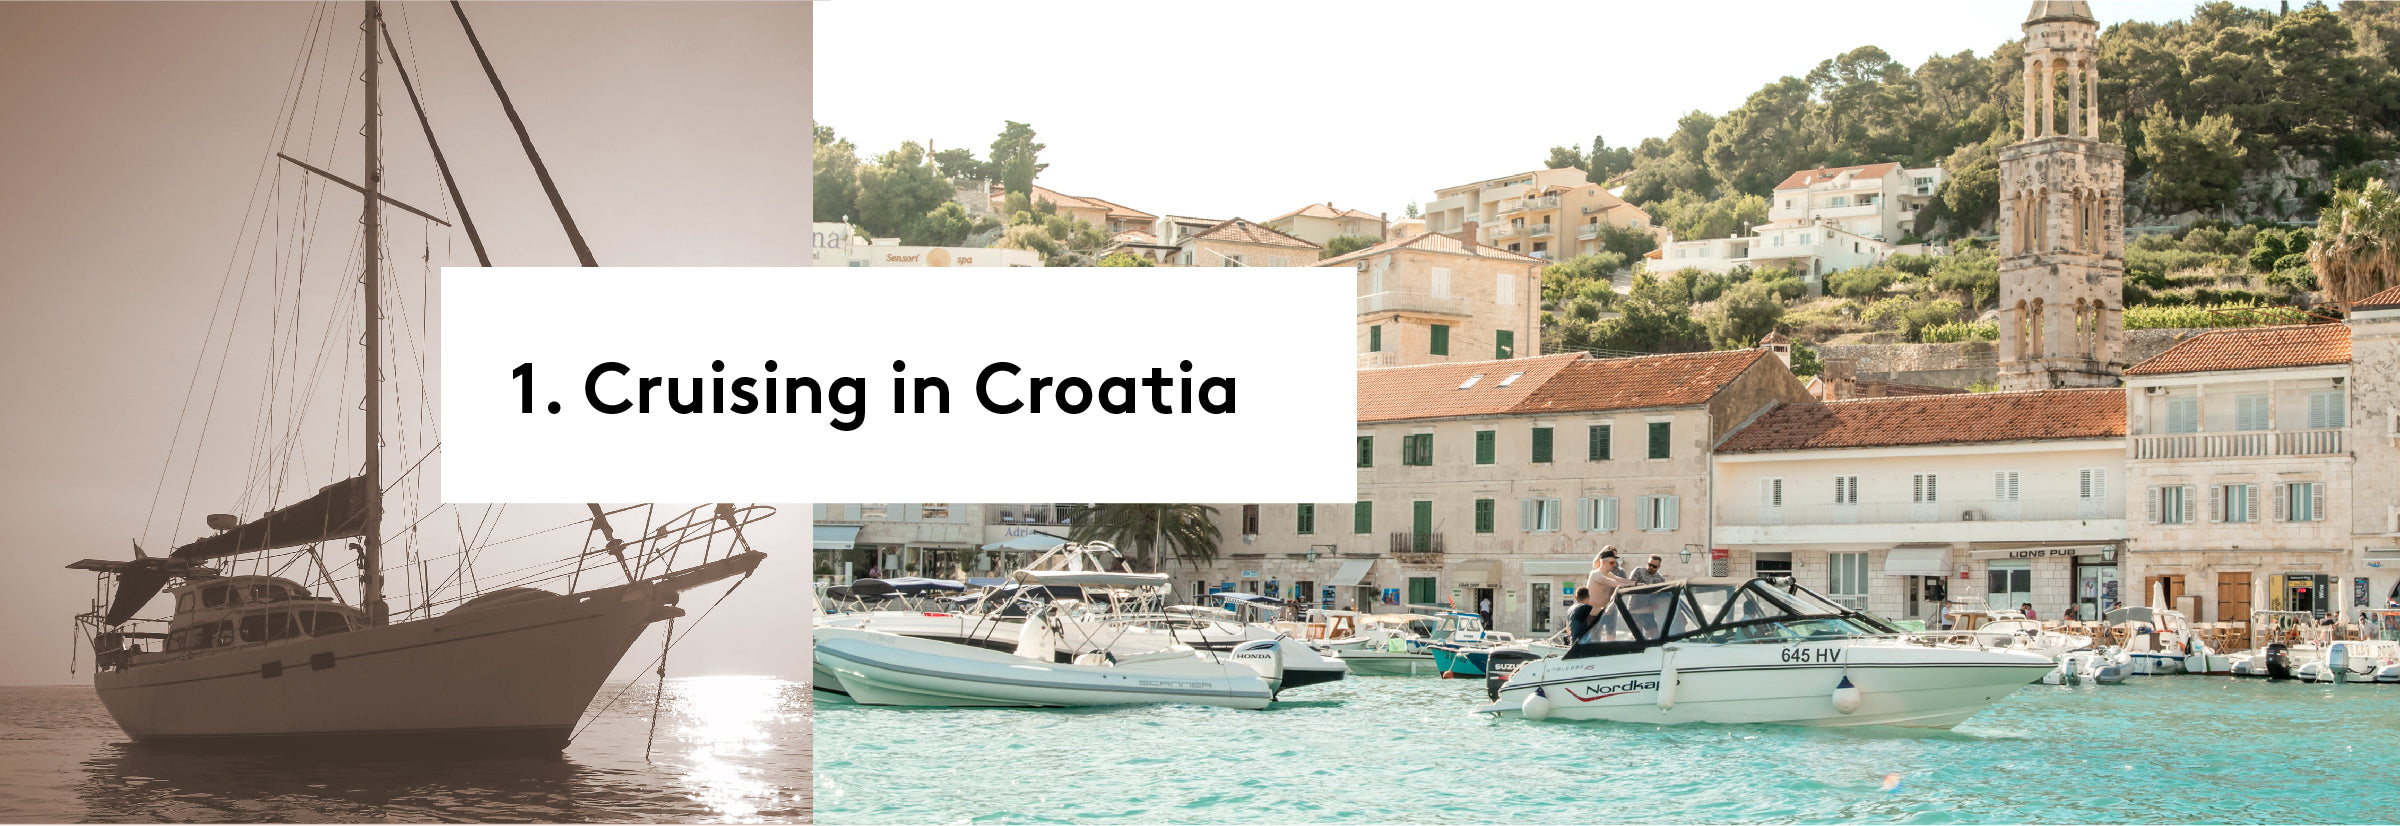 1. Cruising in Croatia